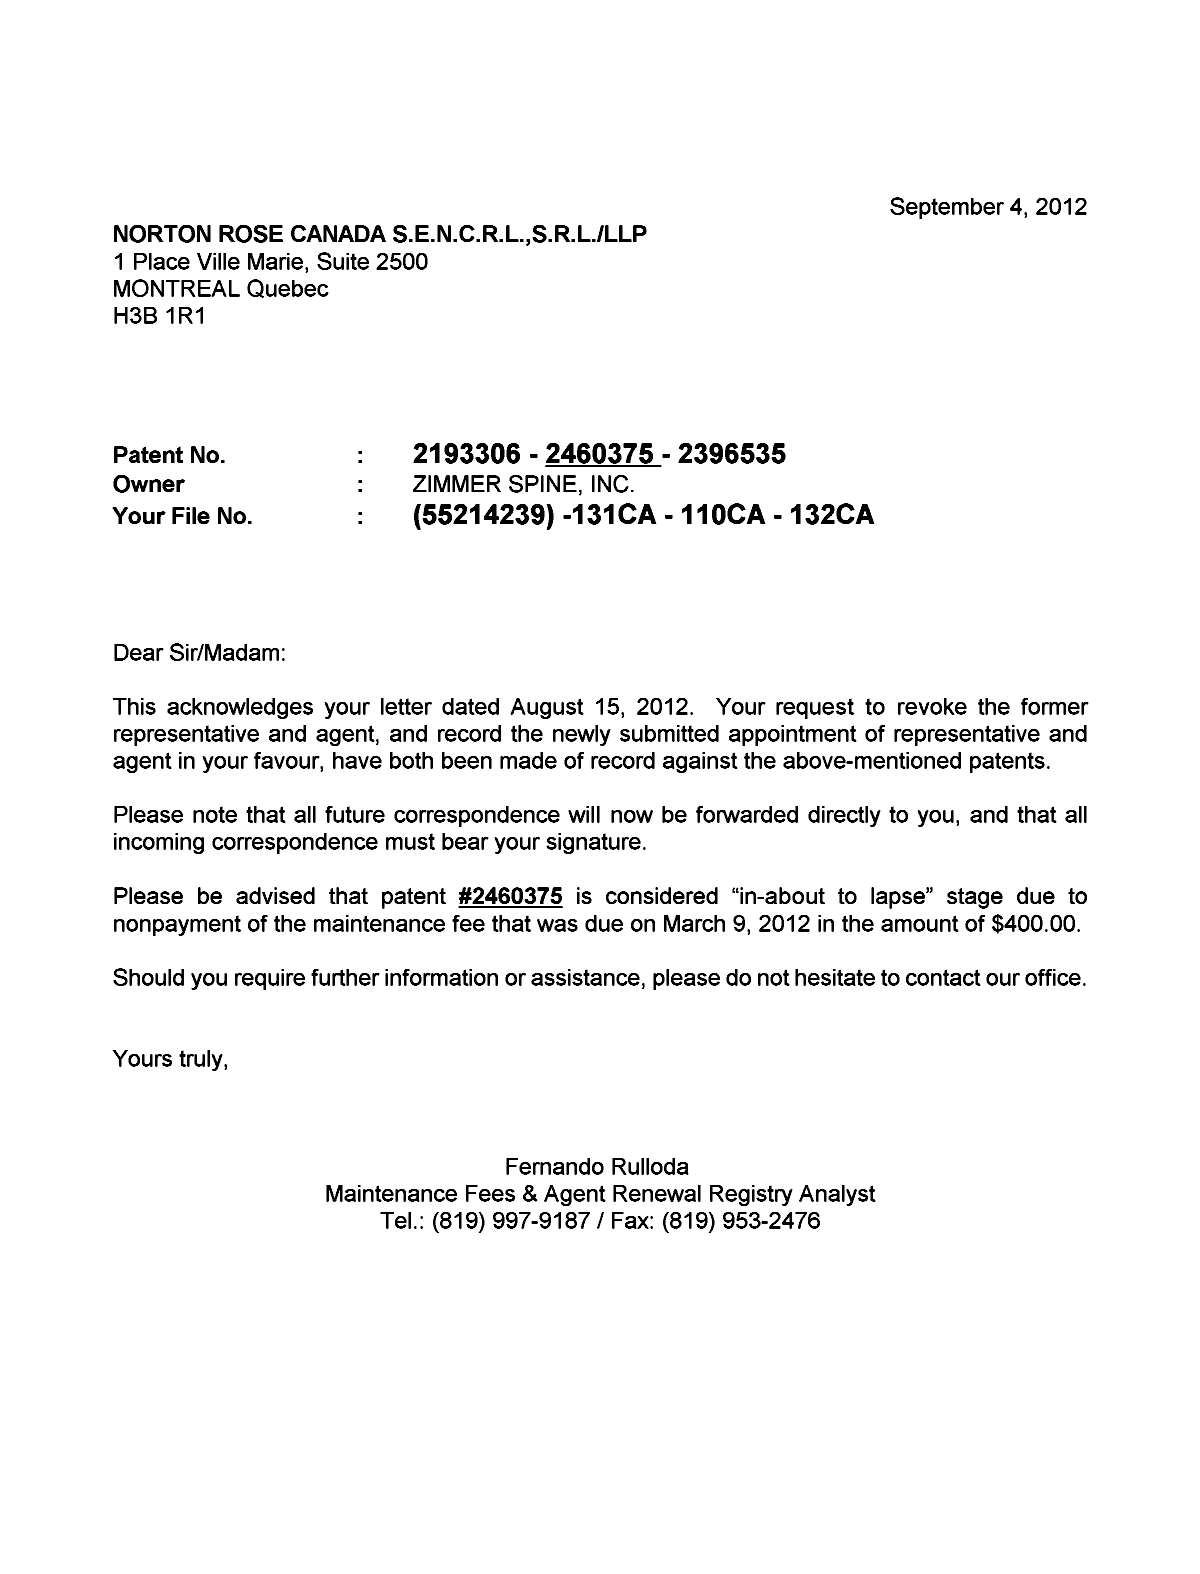 Canadian Patent Document 2396535. Correspondence 20120904. Image 1 of 1